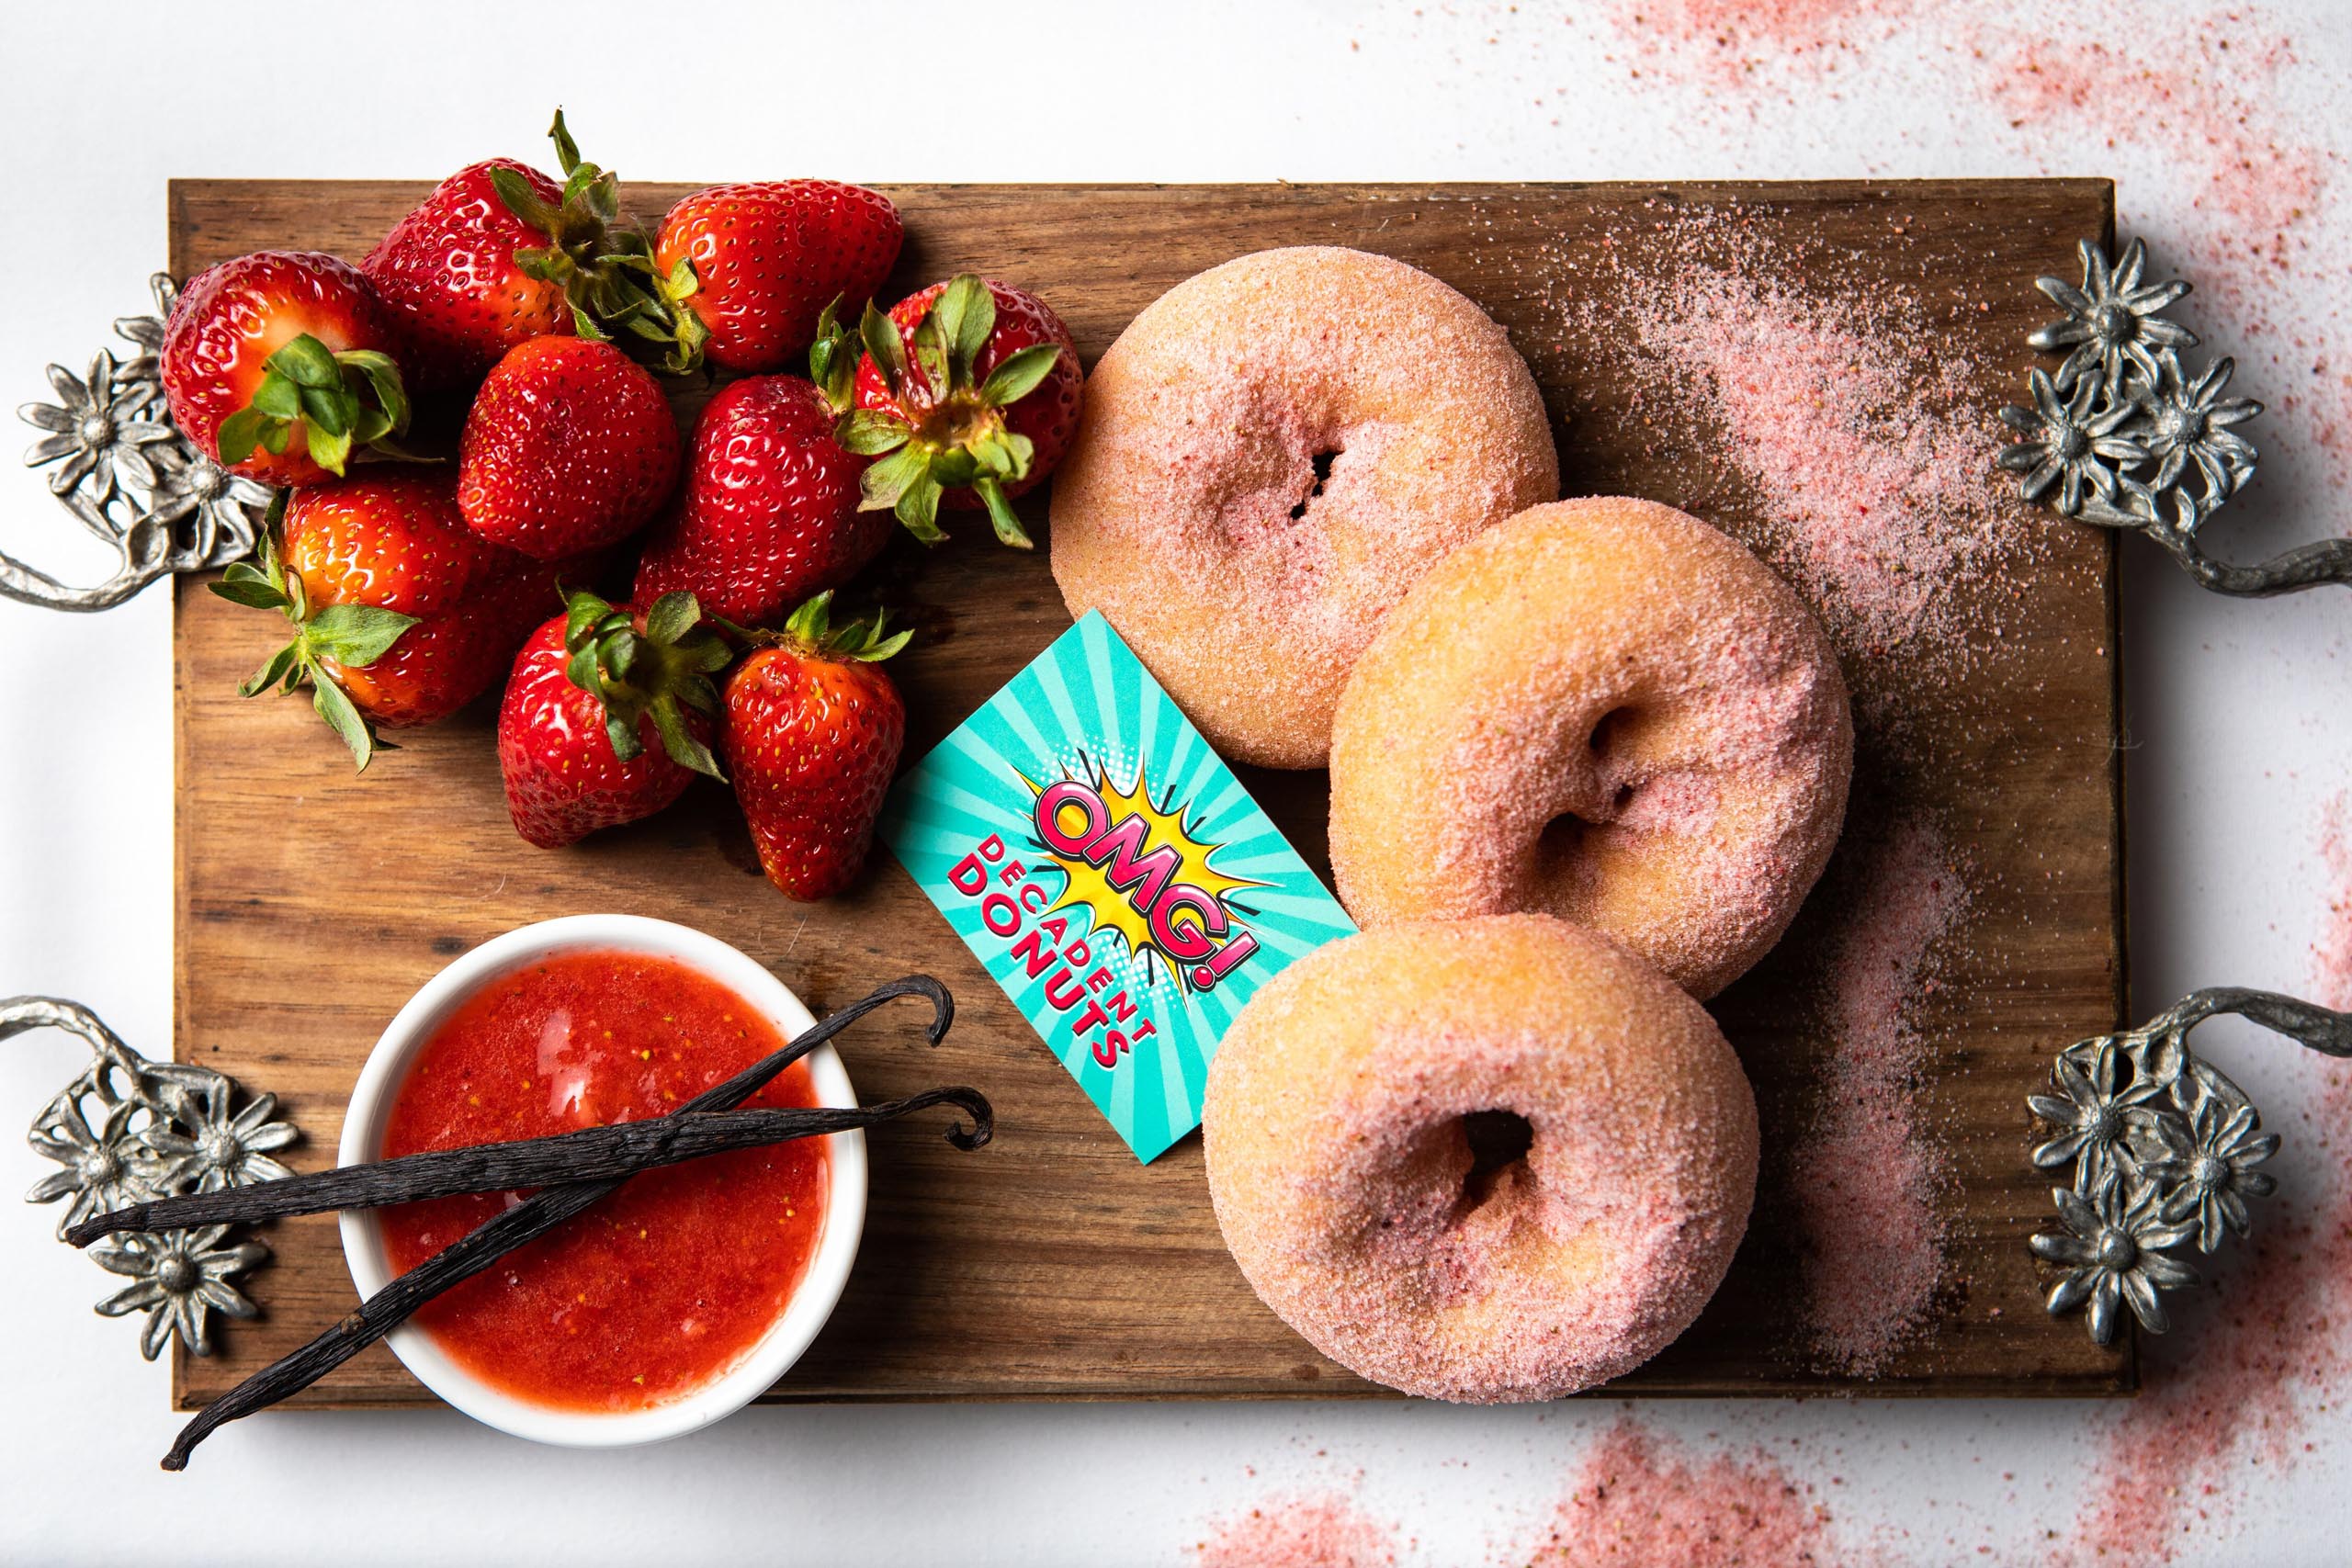 Hot fresh gluten-free donuts that everyone can enjoy